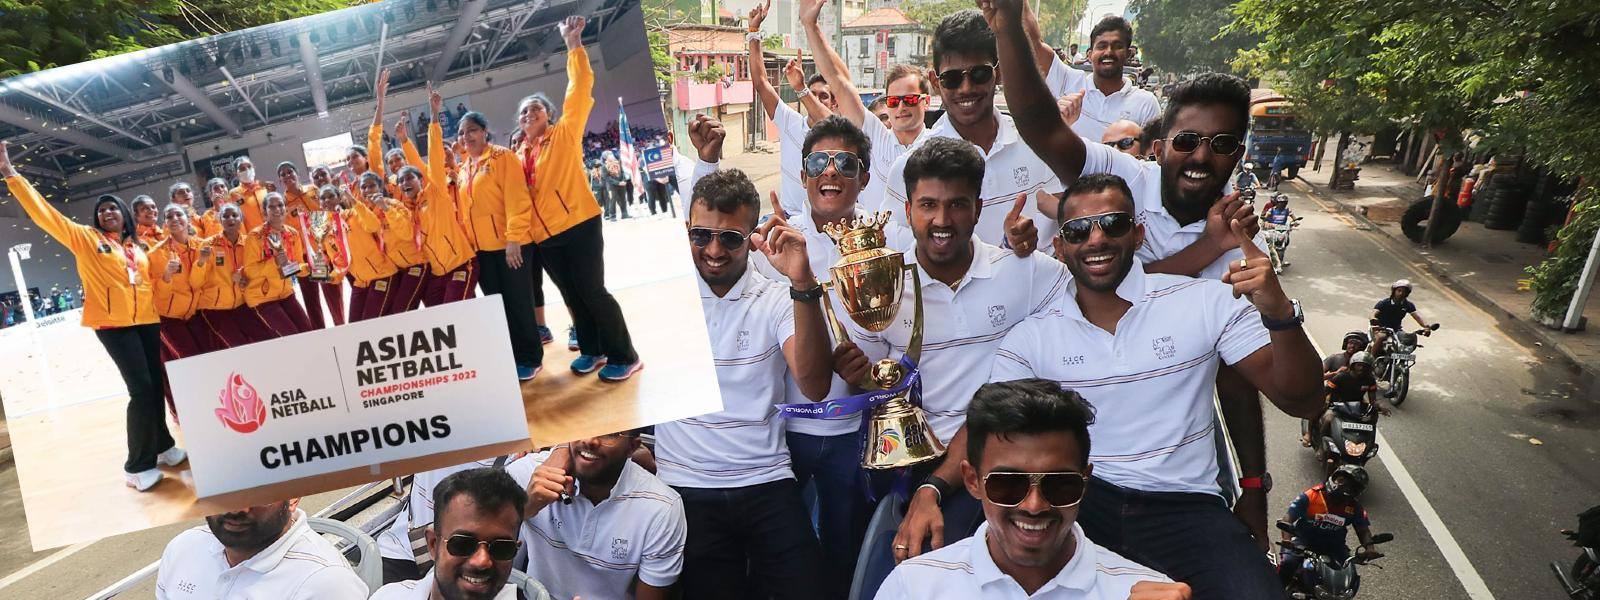 (VIDEO) Asia Champions return to Sri Lanka